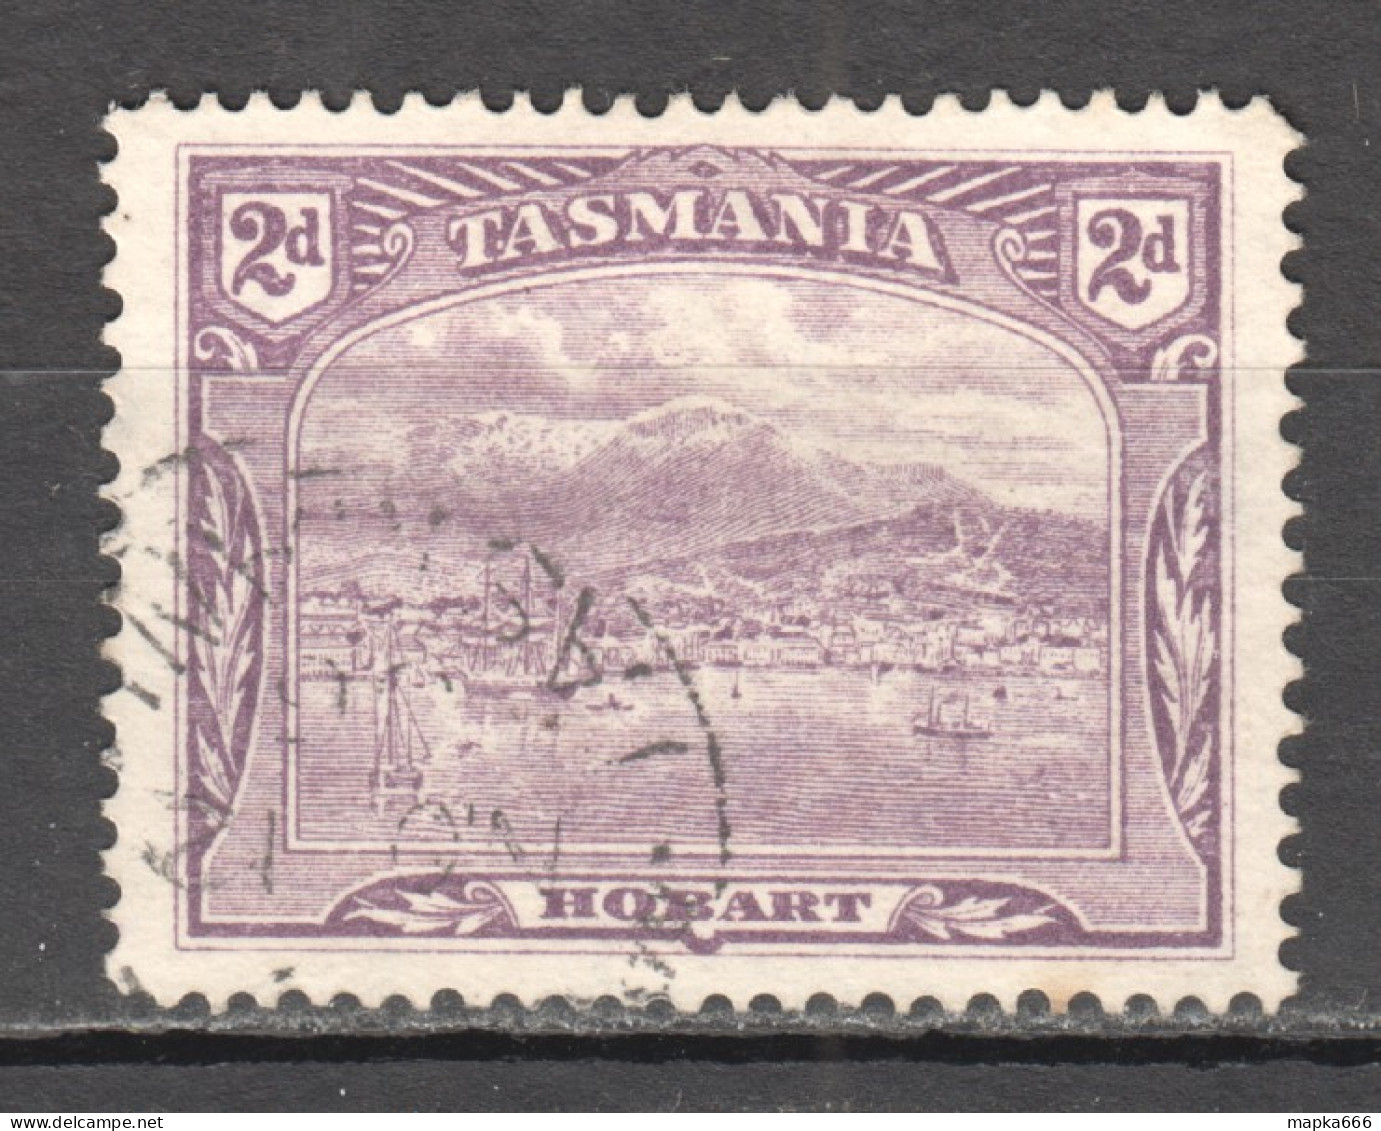 Tas218 1905 Australia Tasmania Gibbons Sg #251 1St Used - Usados